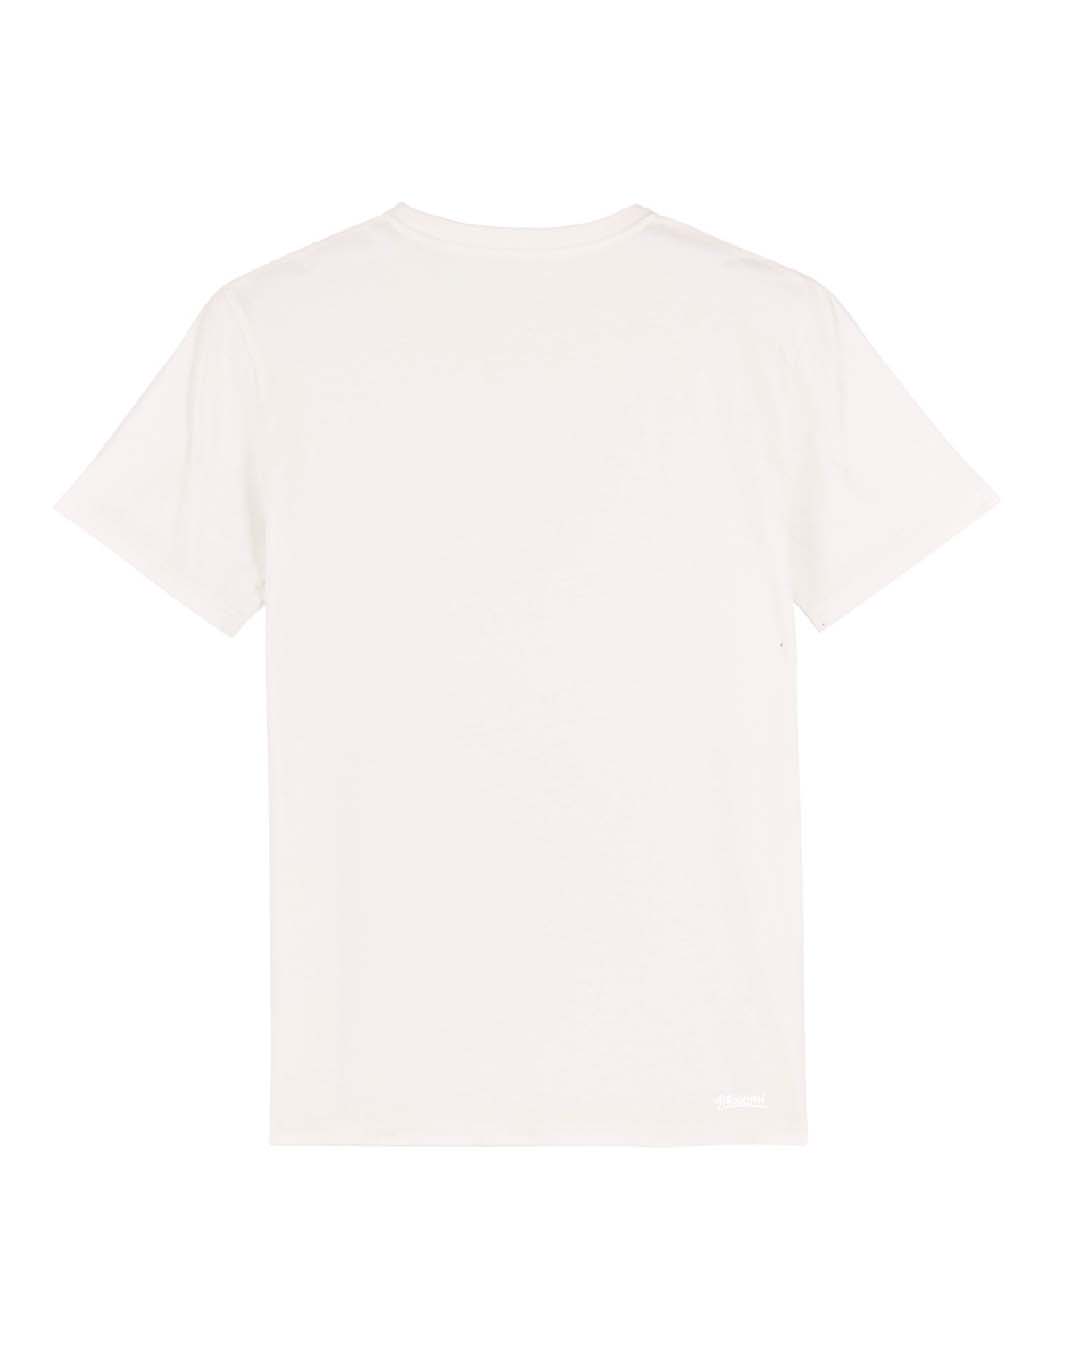 Logo Stitch T-Shirt - Off White/Red